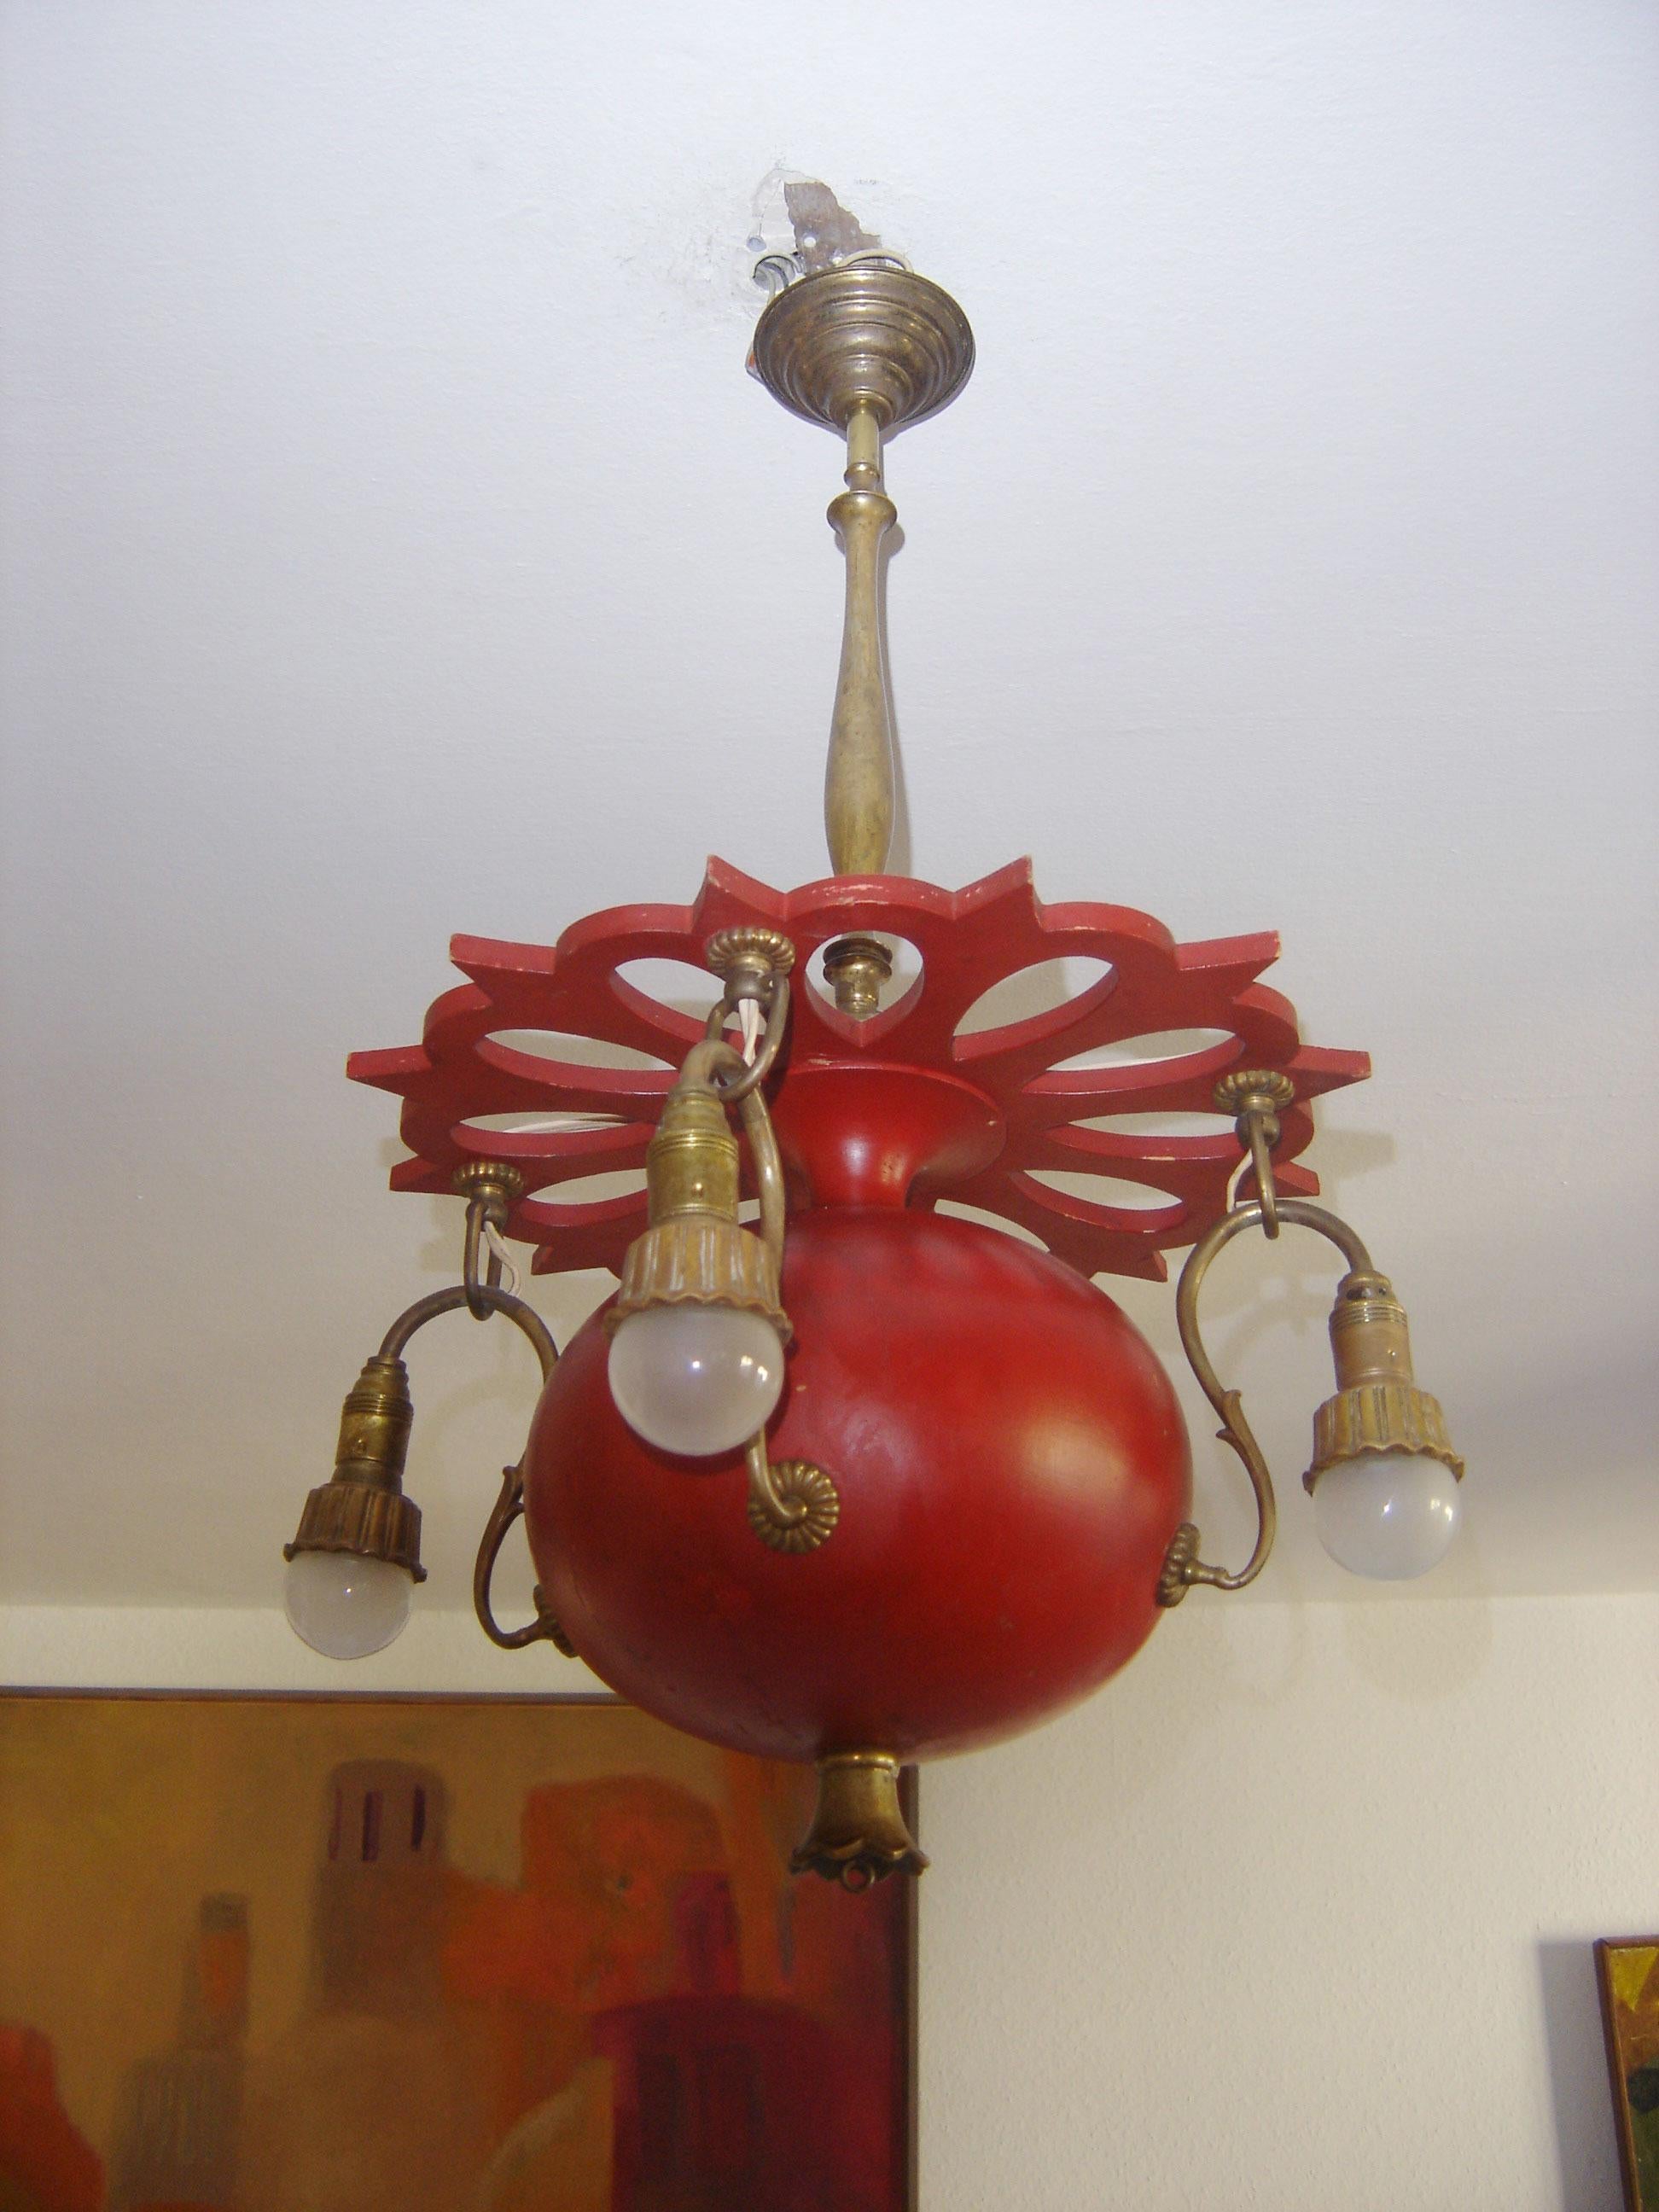 Exceptional Art Nouveau Chandelier or Pendant Lamp 'Granate Apple', 1900 Germany For Sale 1